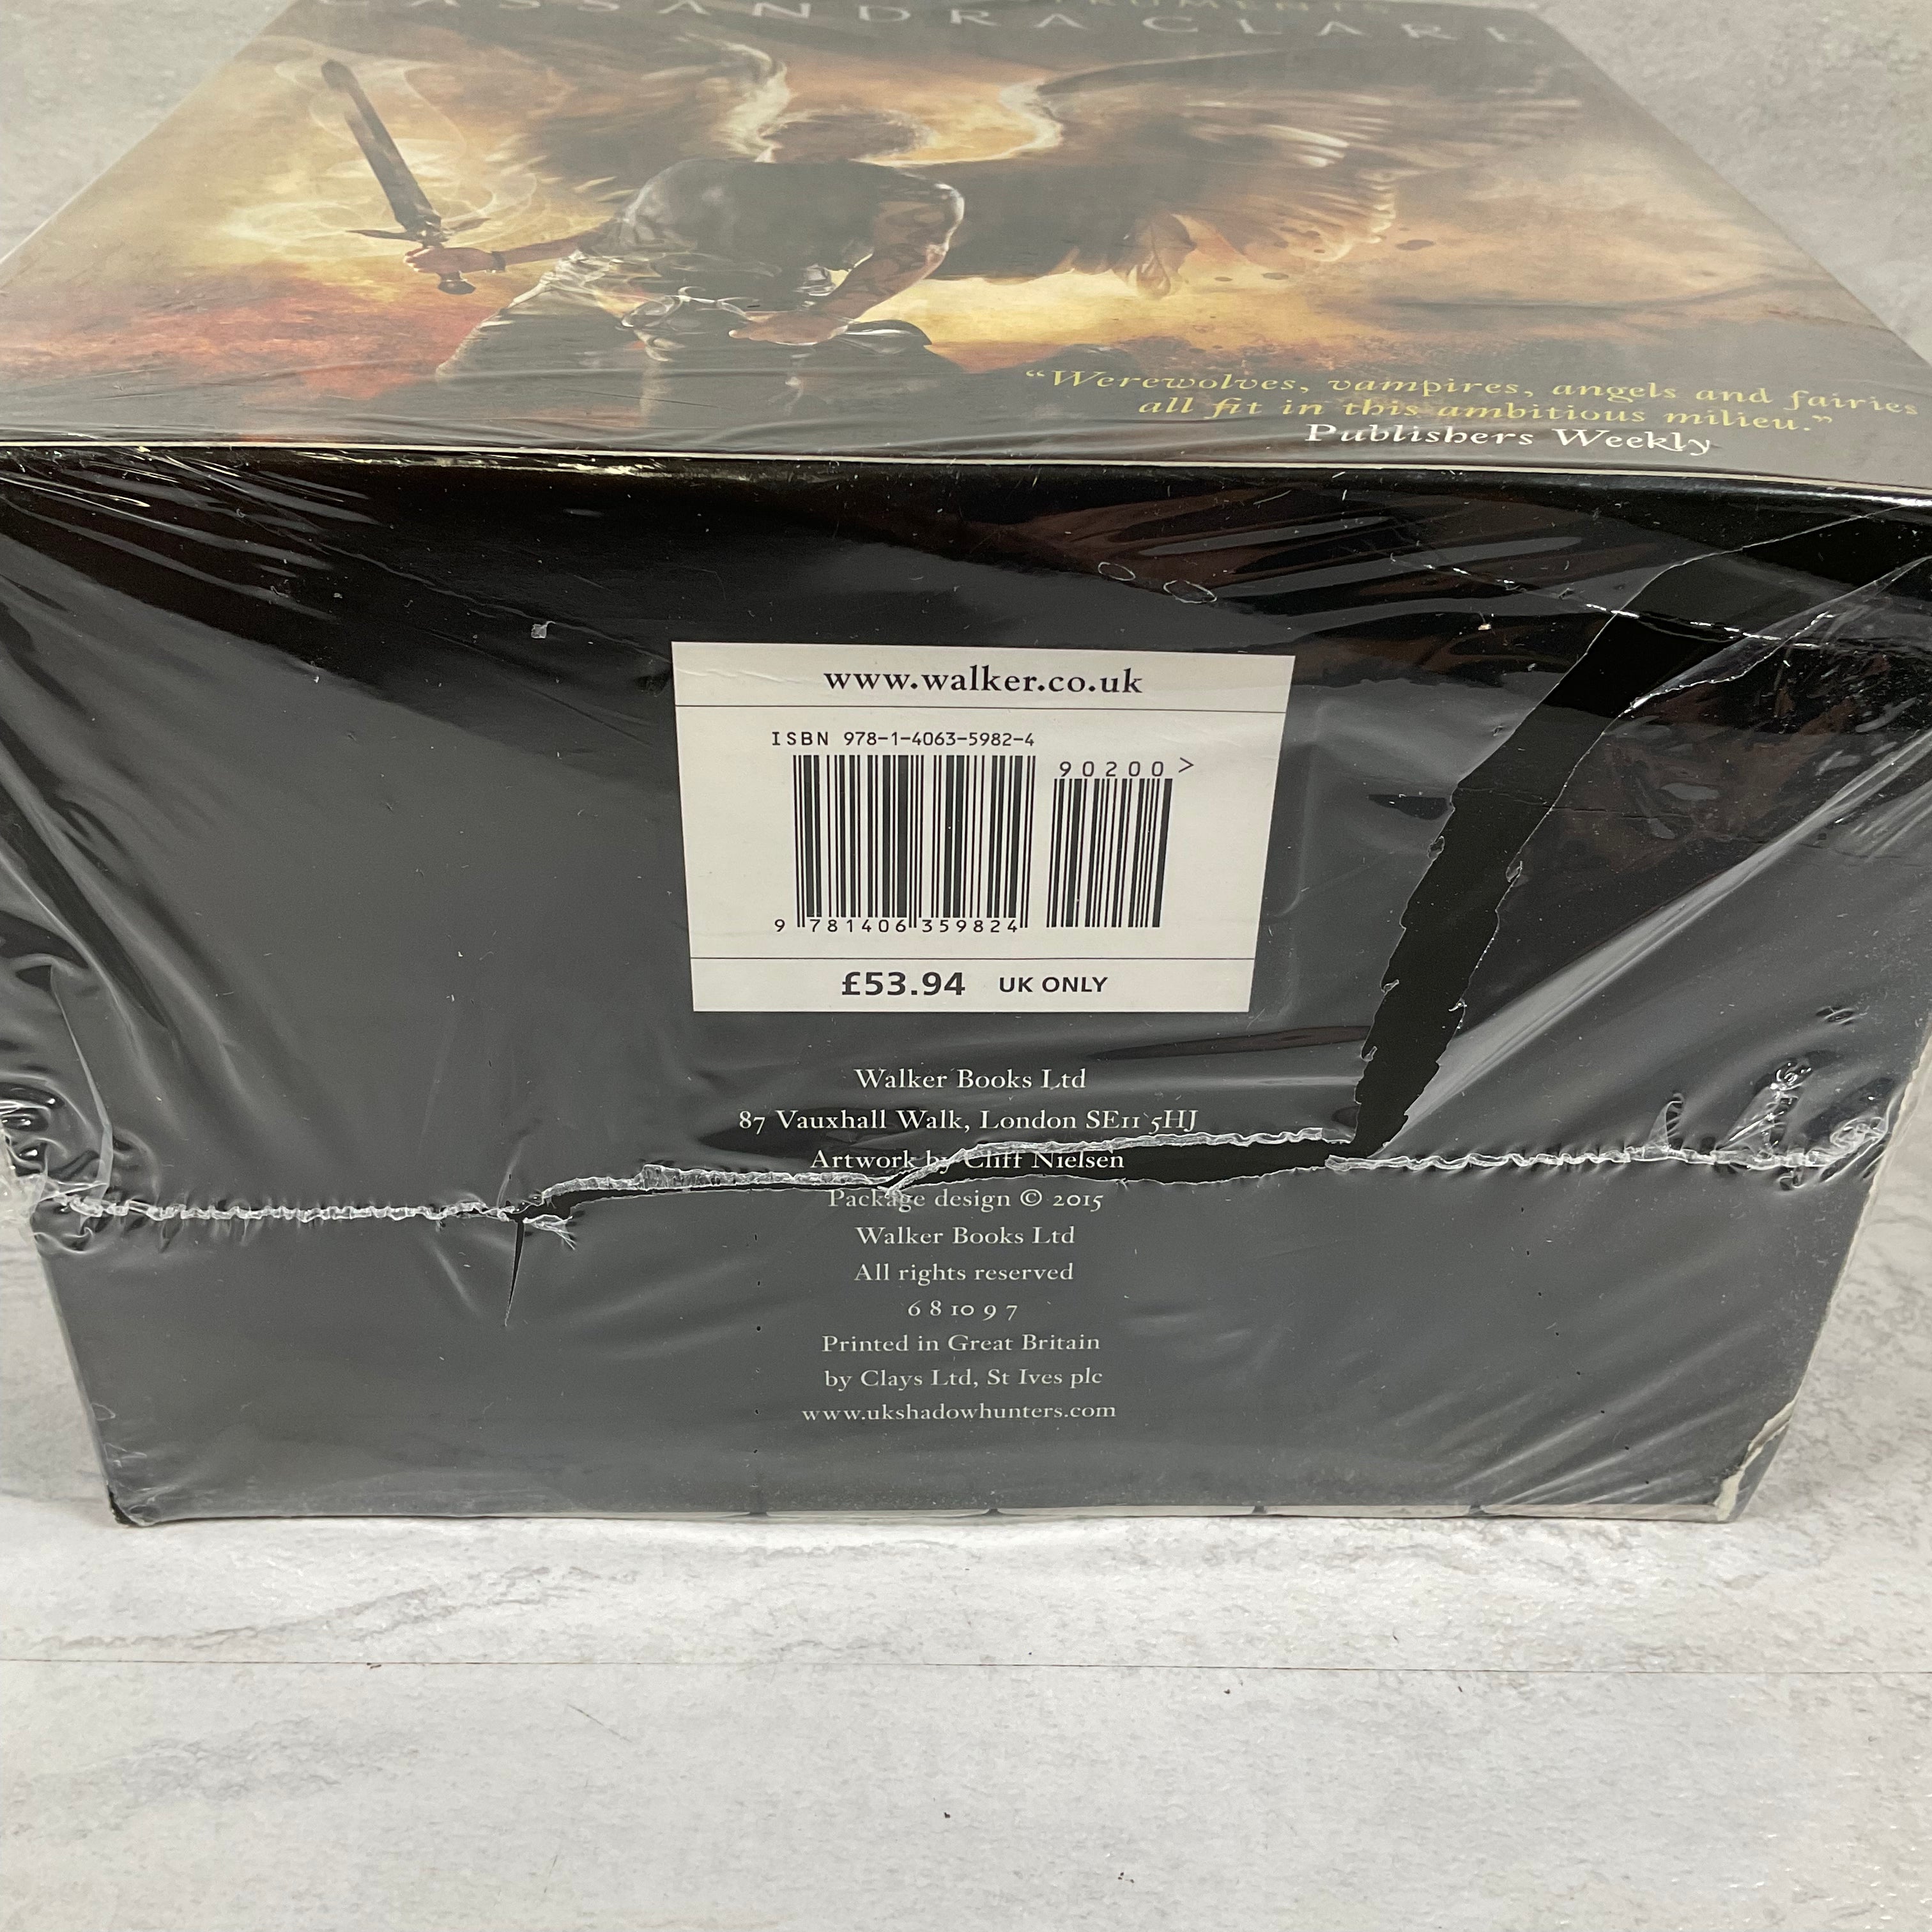 The Mortal Instruments Boxed Set (7341398458606)